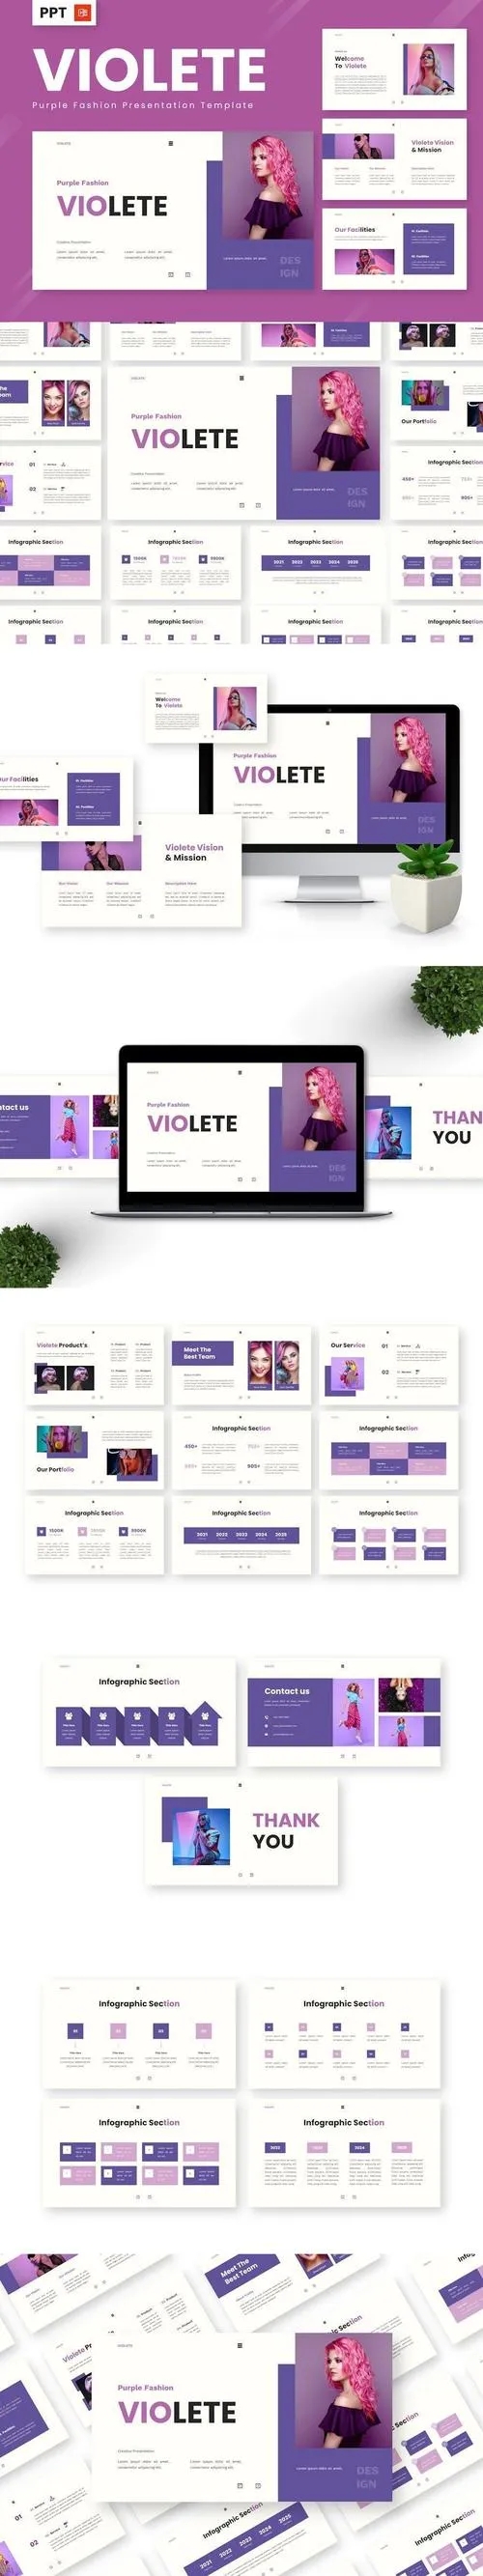 Violete - Purple Fashion Powerpoint Templates